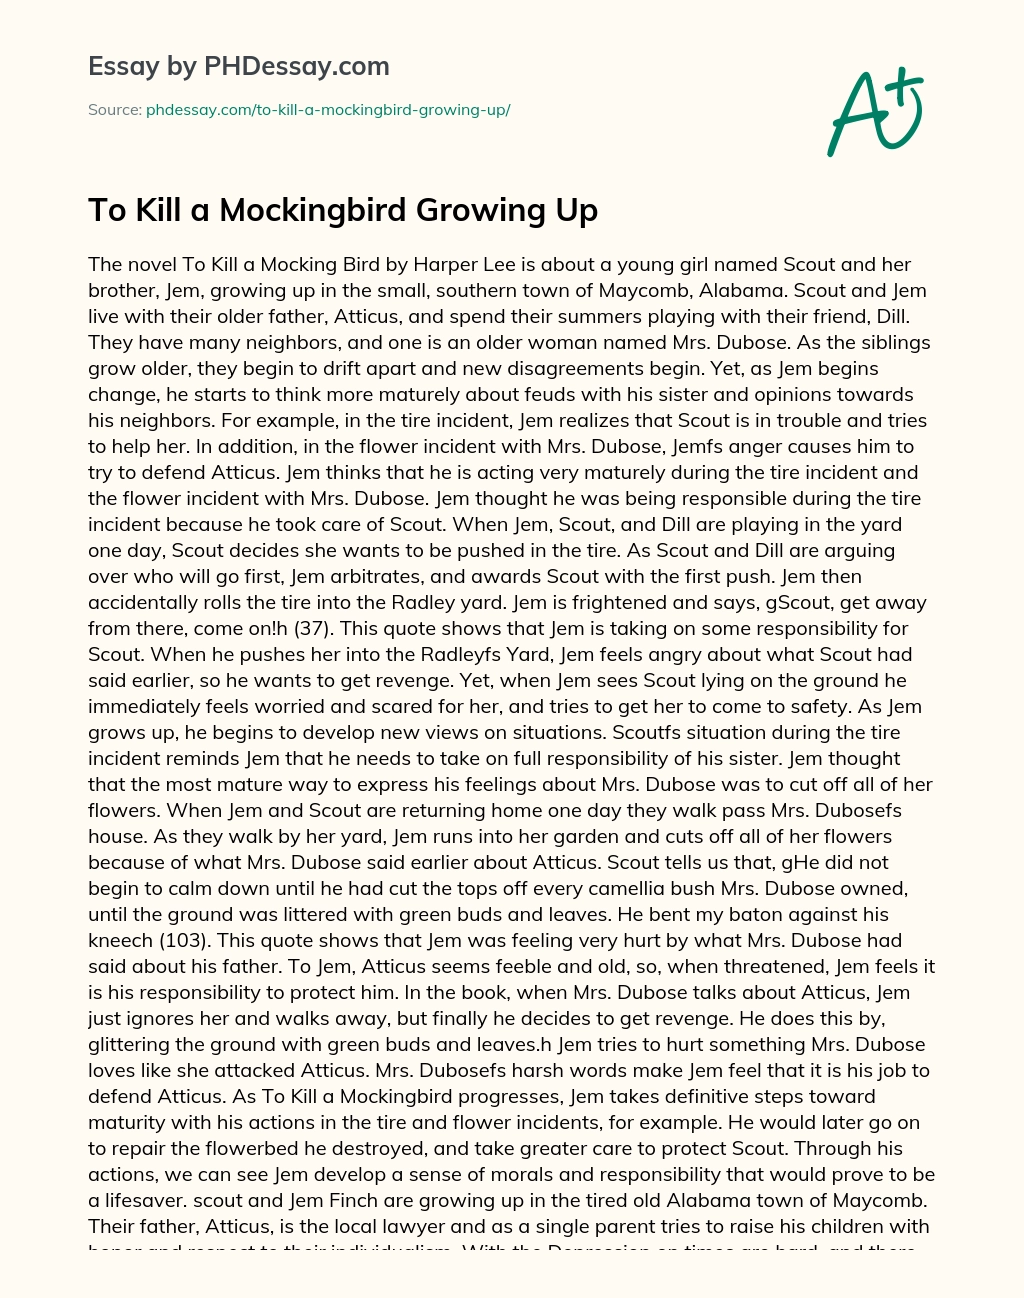 To Kill a Mockingbird Growing Up essay